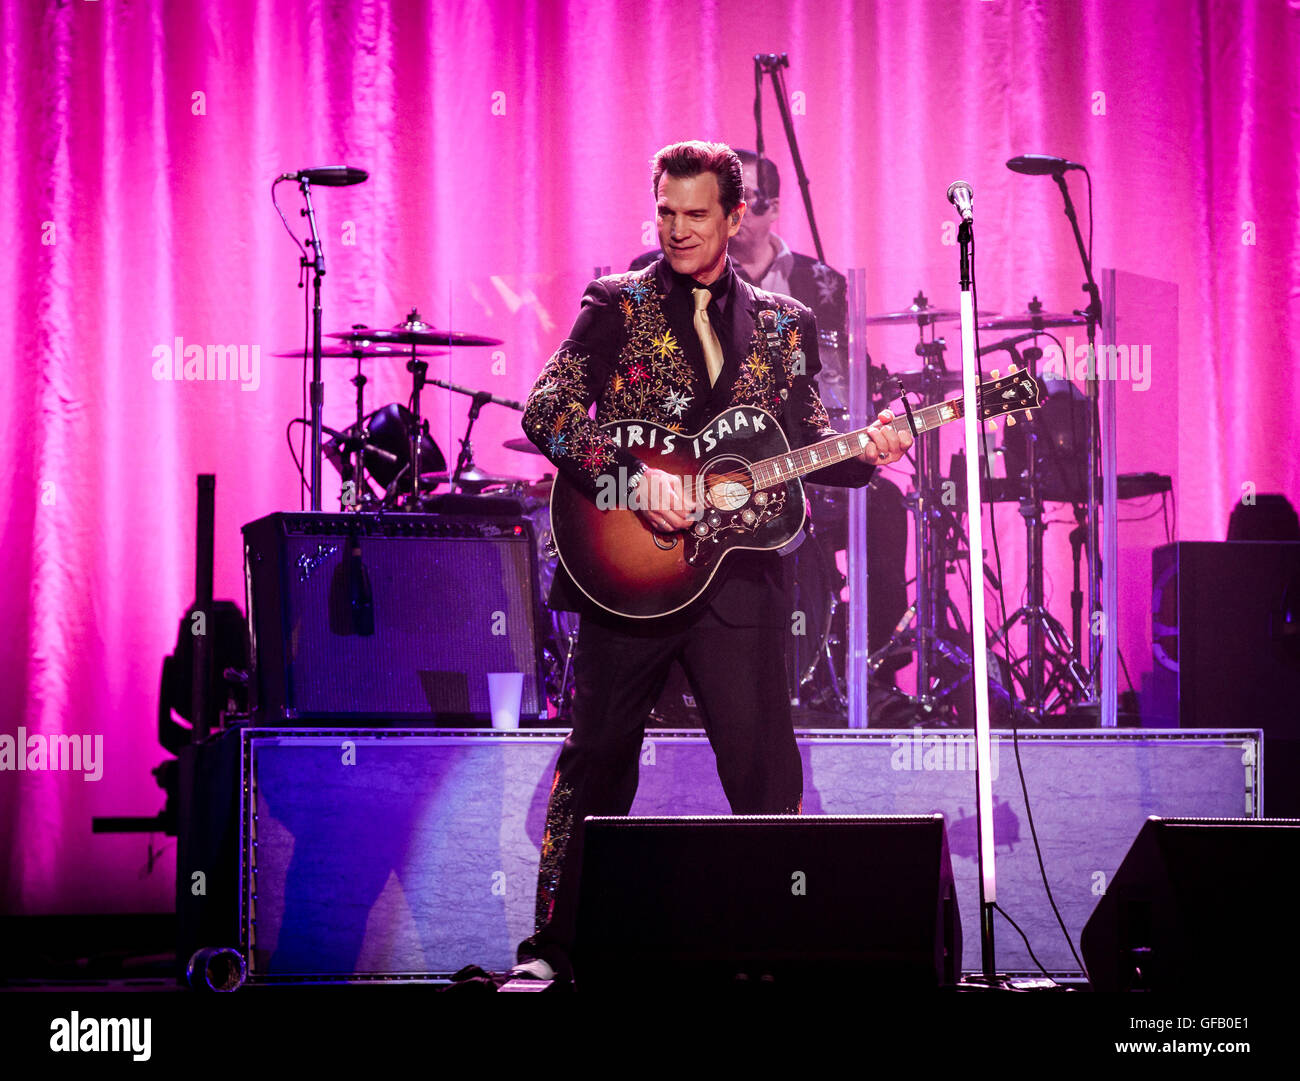 Las Vegas, Nevada, USA. 30th July, 2016. Chris Isaak performs at The Joint at Hard Rock Hotel & Casino in Las vegas, NV on July 30, 2016. Credit: Erik Kabik Photography/ MediaPunch Stock Photo